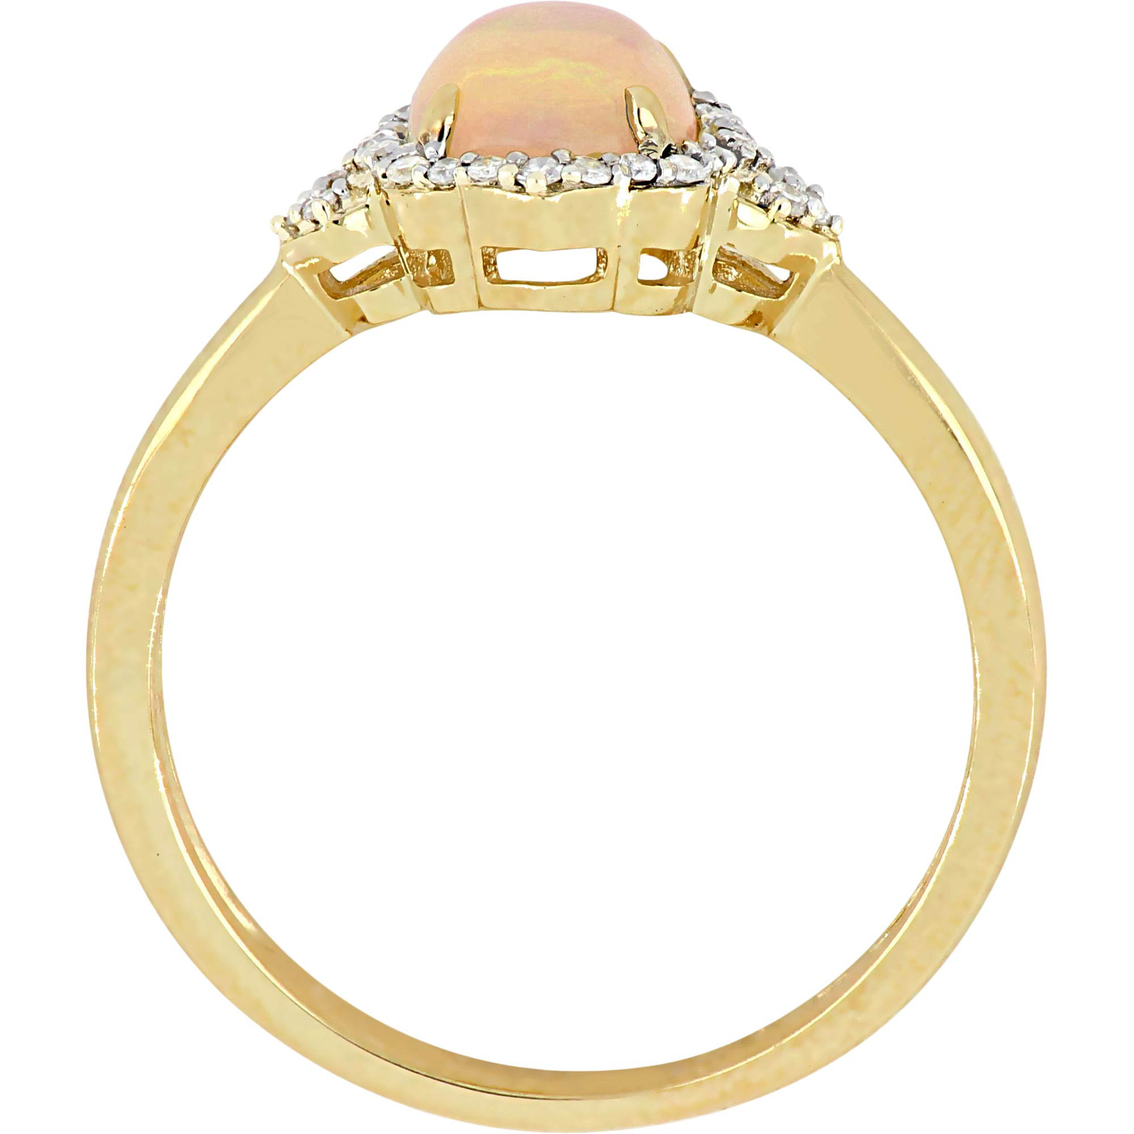 Sofia B. 10K Yellow Gold 1/8 CTW Diamond and Ethiopian Opal Halo Ring - Image 2 of 4